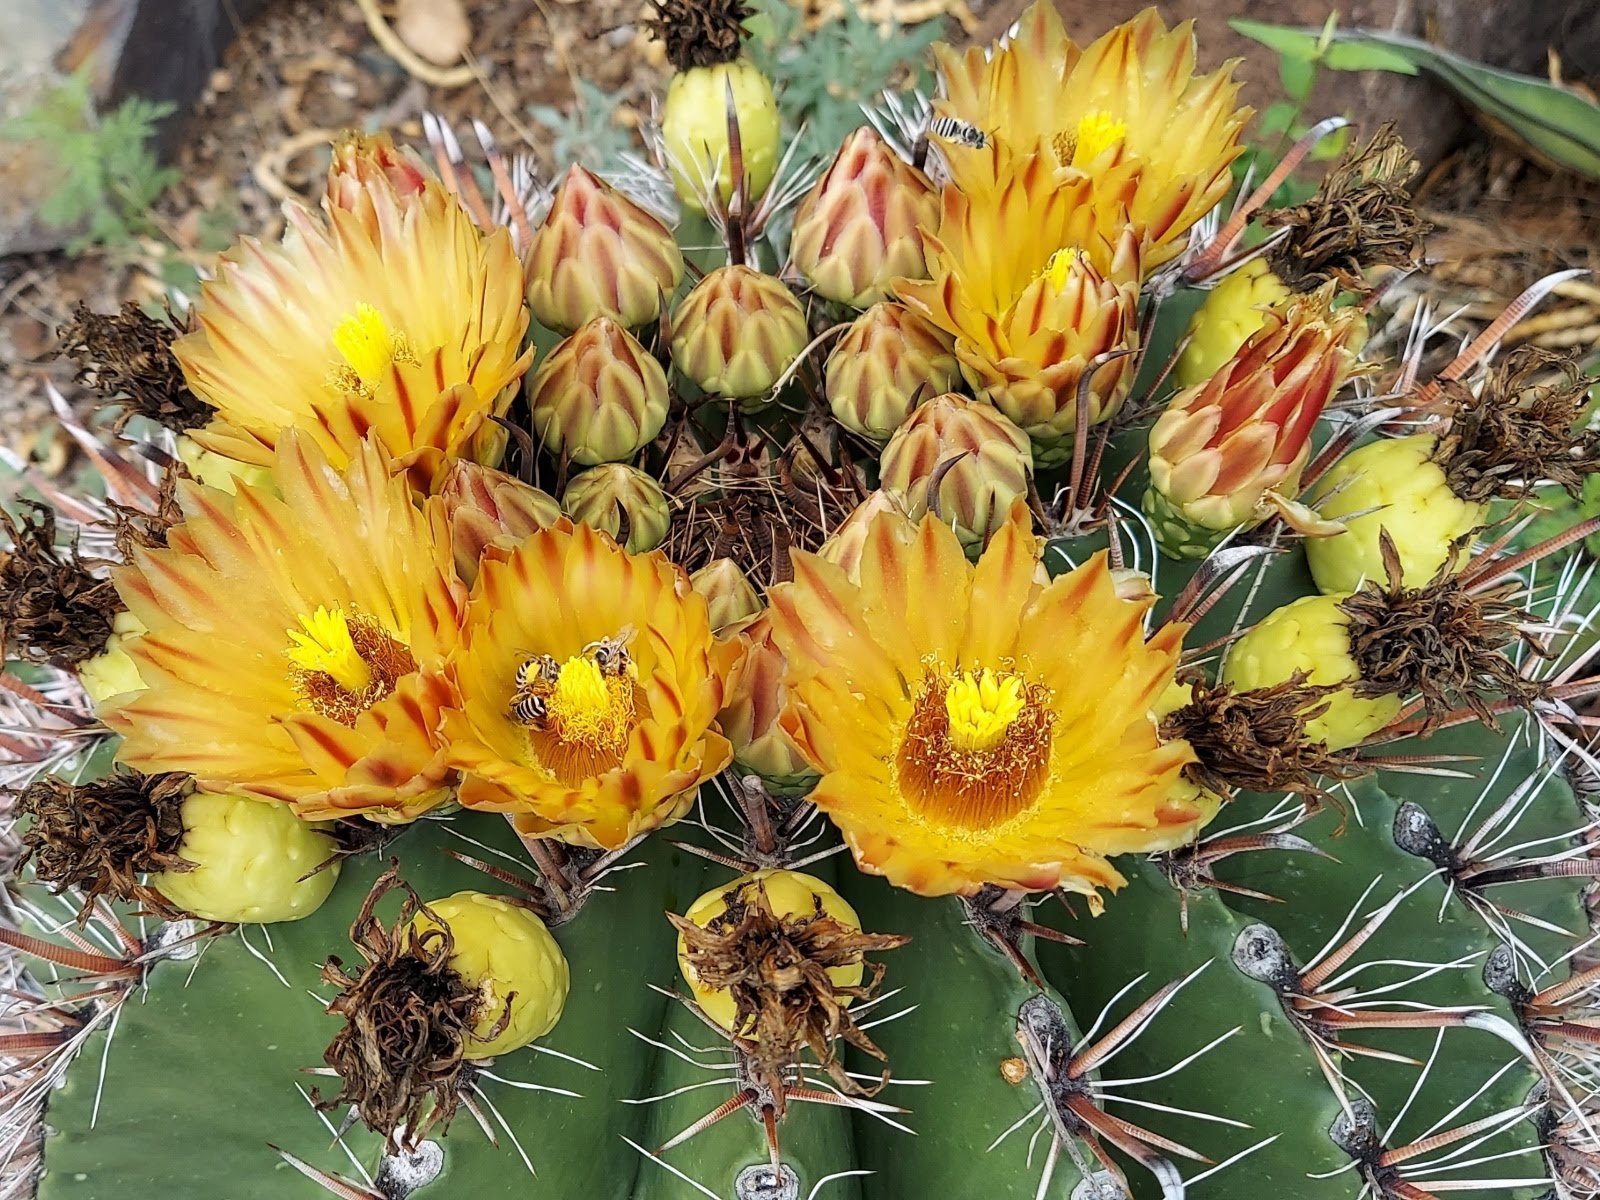 Bright yellow cactus flowers at Tucson Botanical Gardens